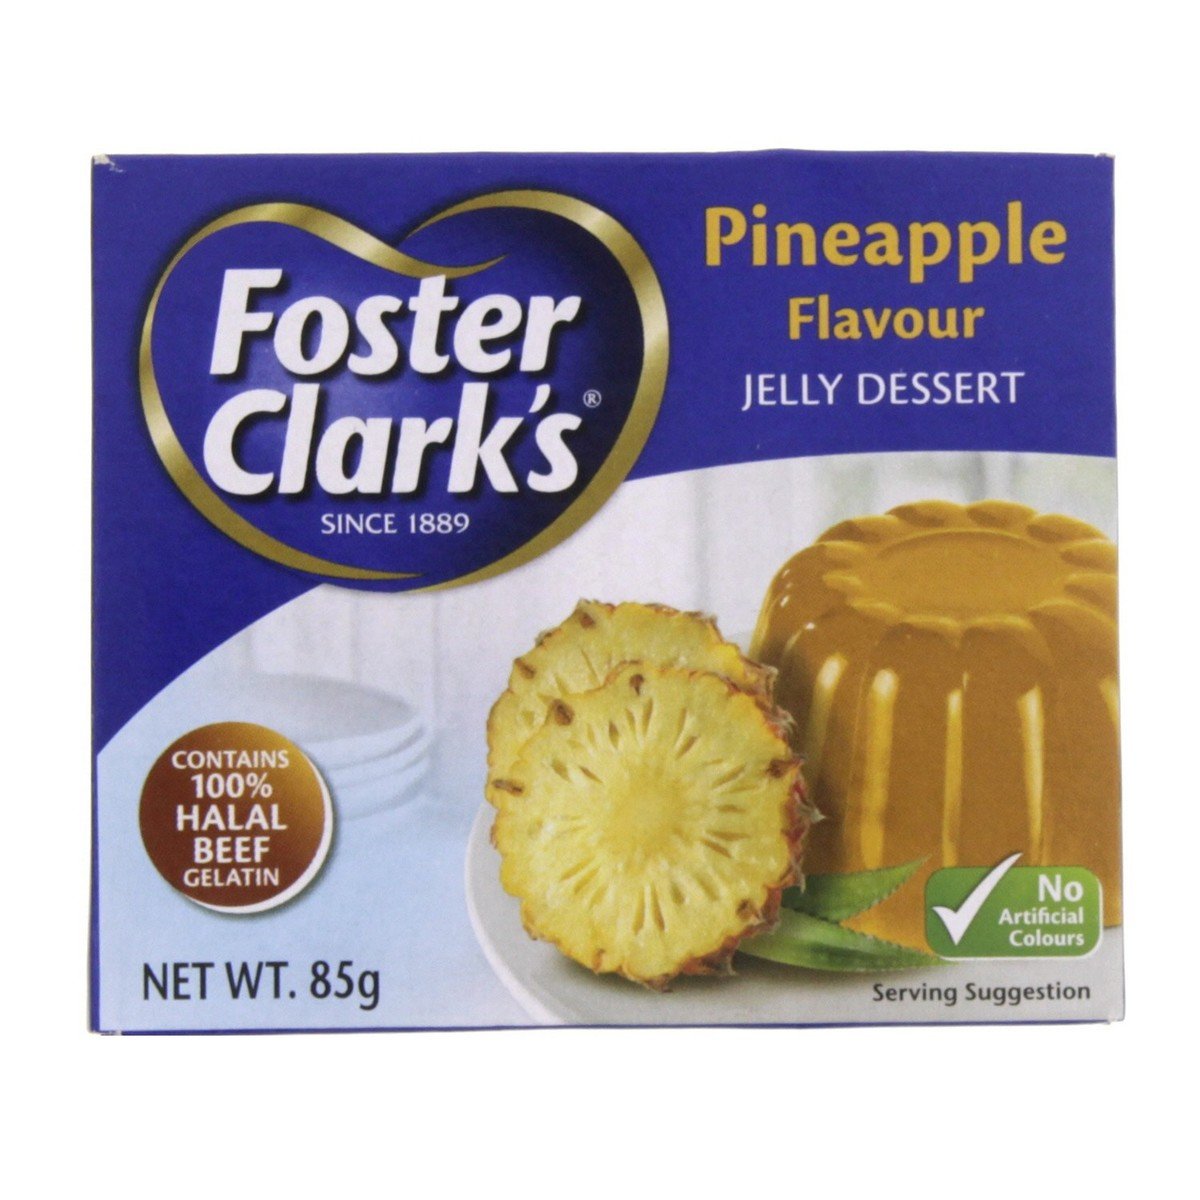 Foster Clark's Jelly Dessert Pineapple Flavour 85 g